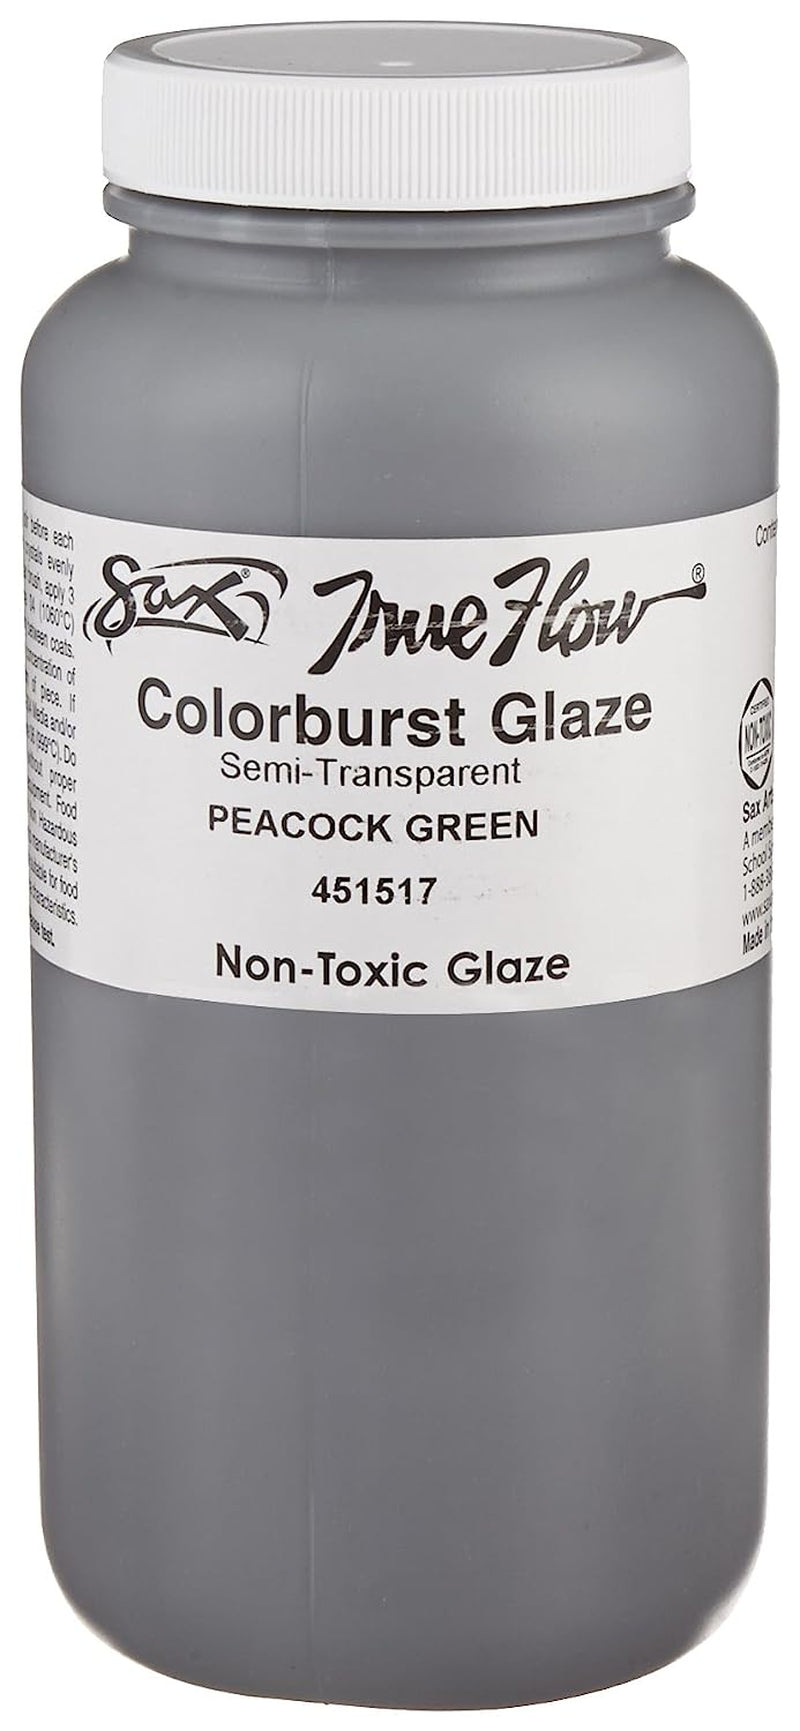 Sax True Flow Colorburst Glazes - 1 Pint - Peacock Green